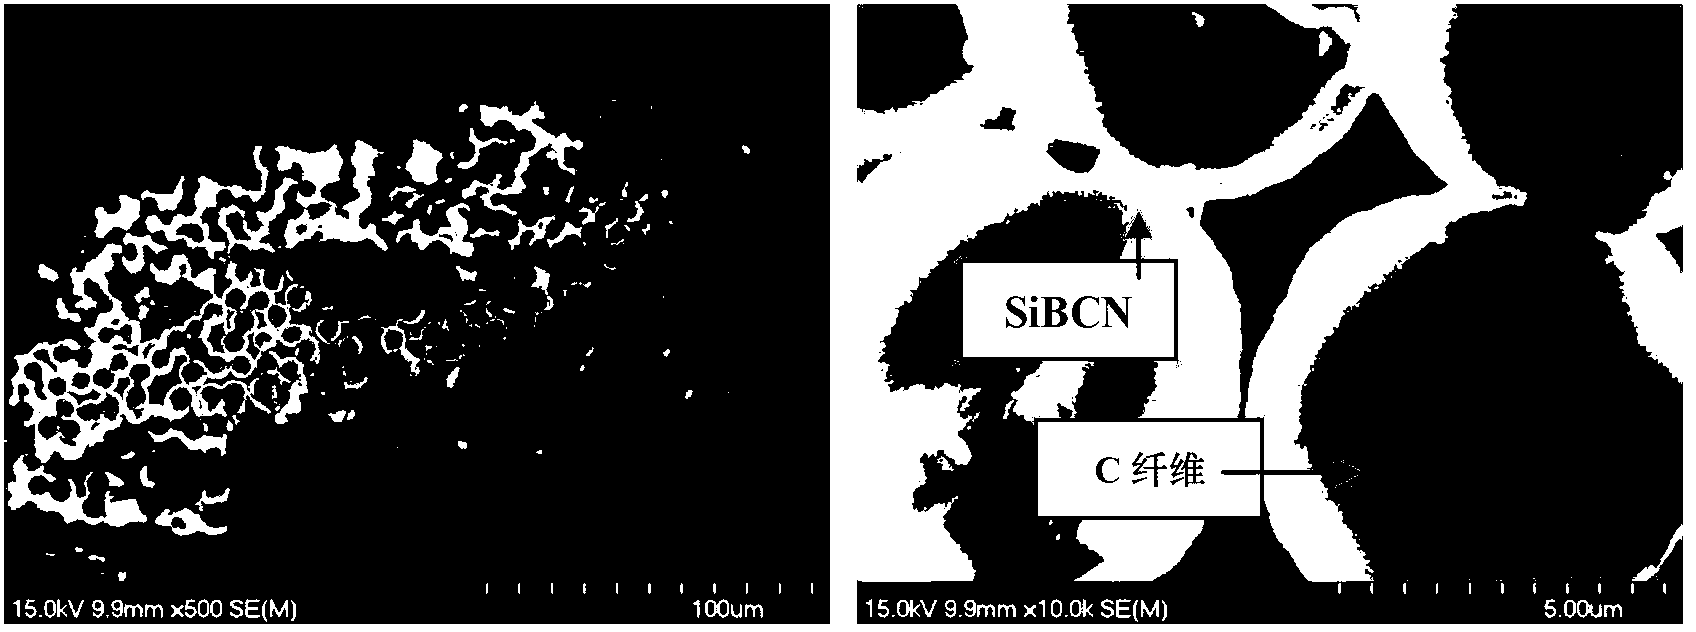 Chemical vapor deposition method of Si-B-C-N amorphous ceramic